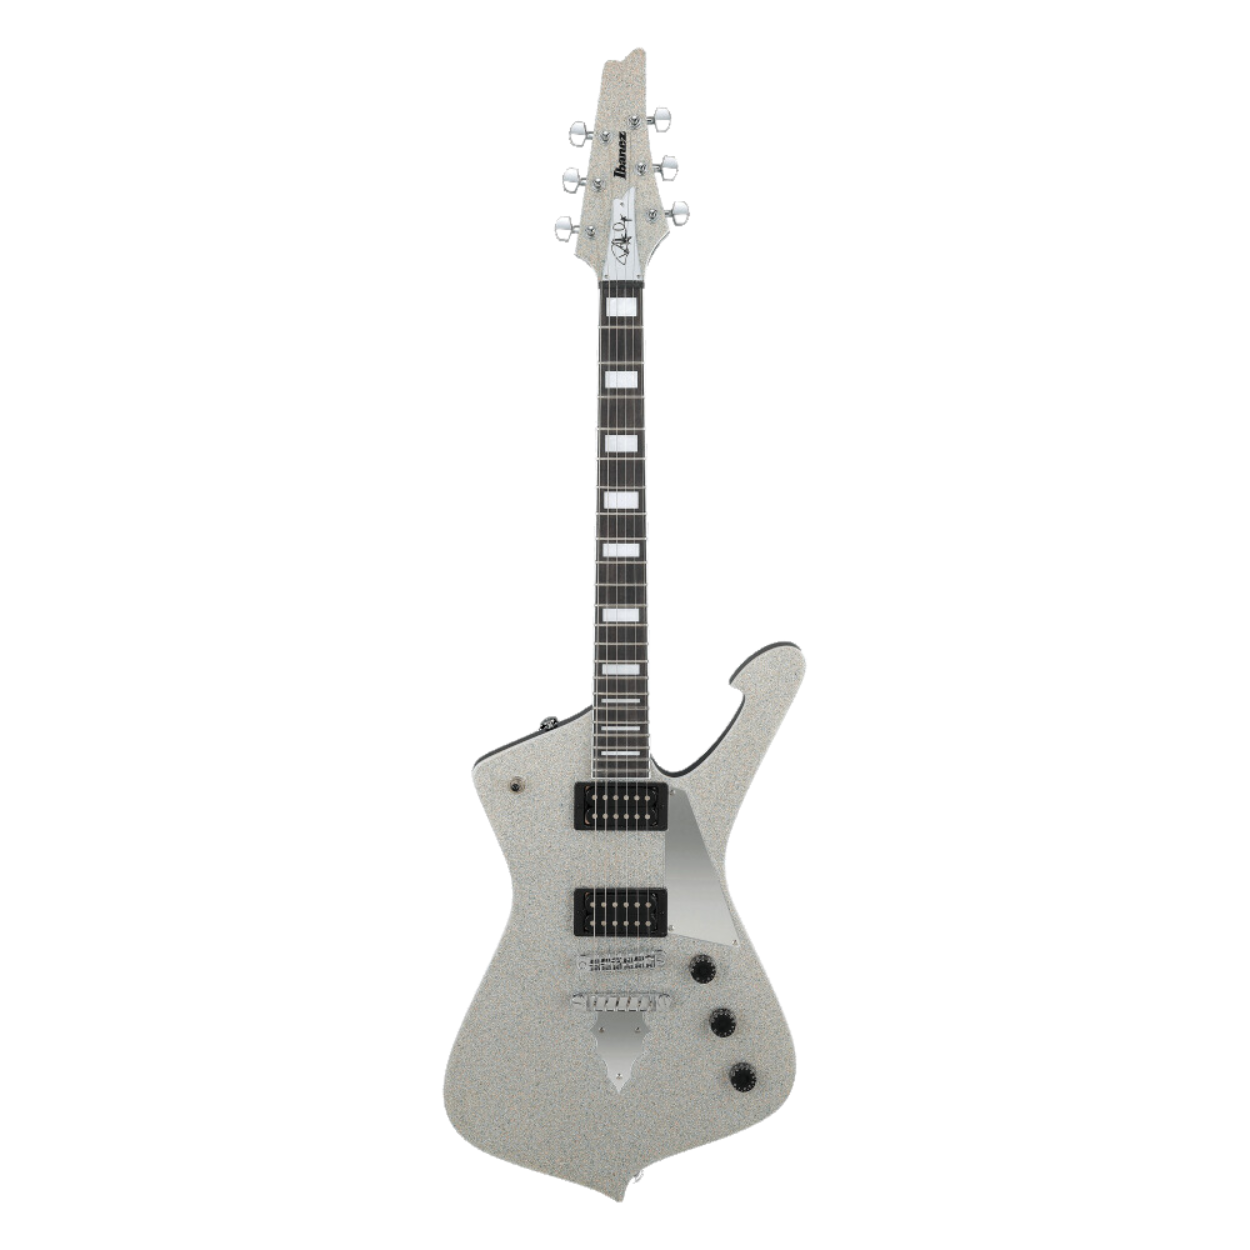 Ibanez Ps60-ssl Paul Stanley Signature Electric Guitar, Silver Sparkle